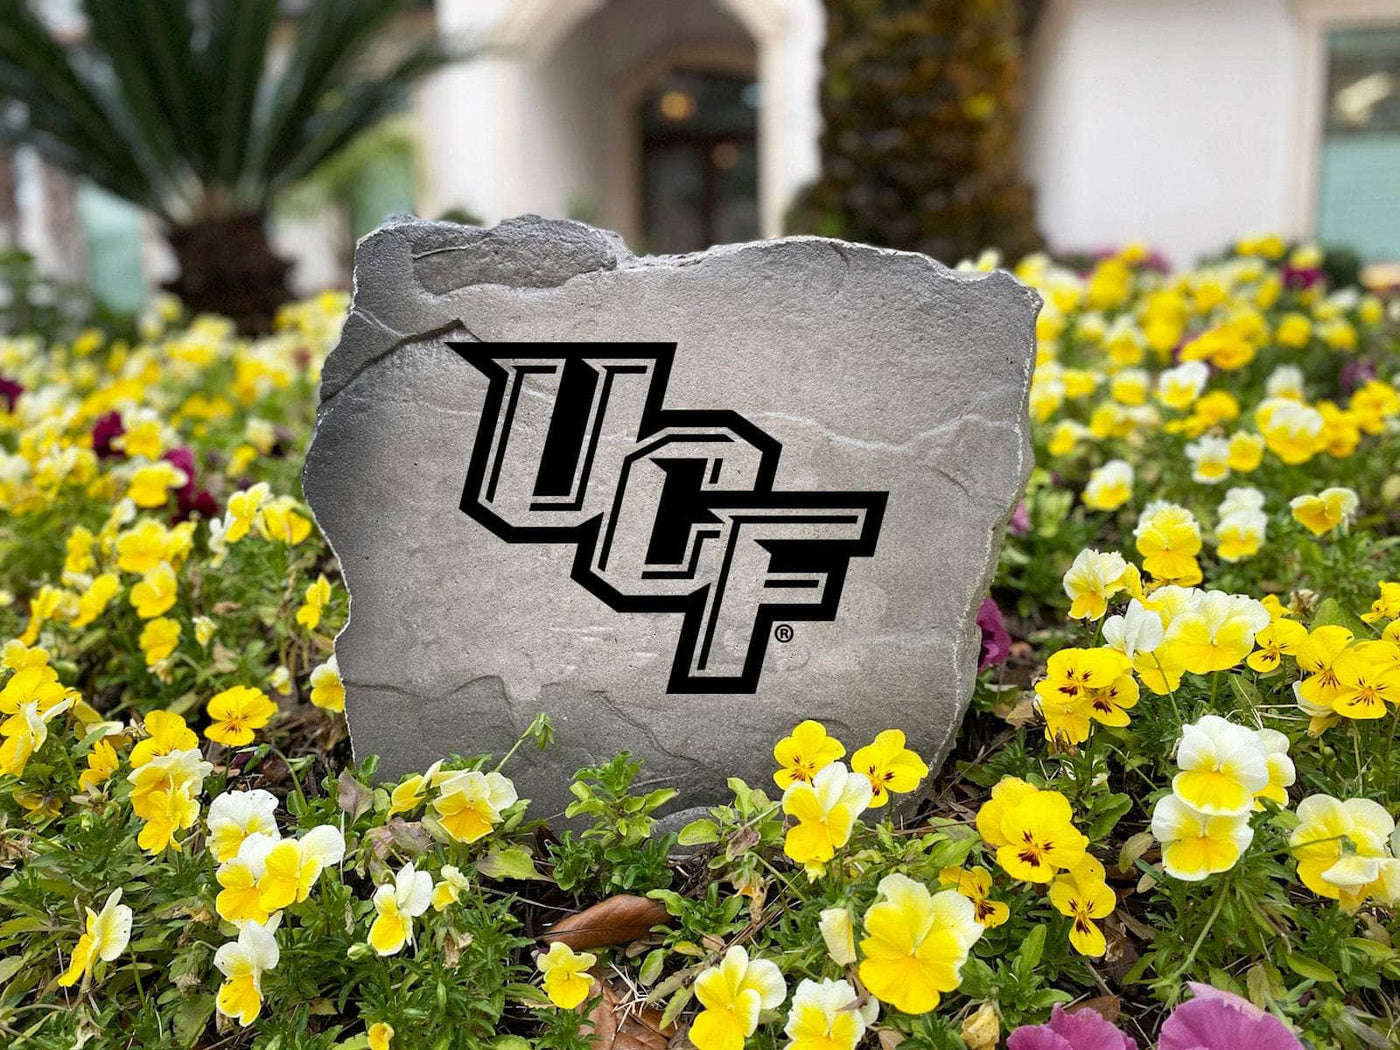 University Of Central Florida Logo Stone